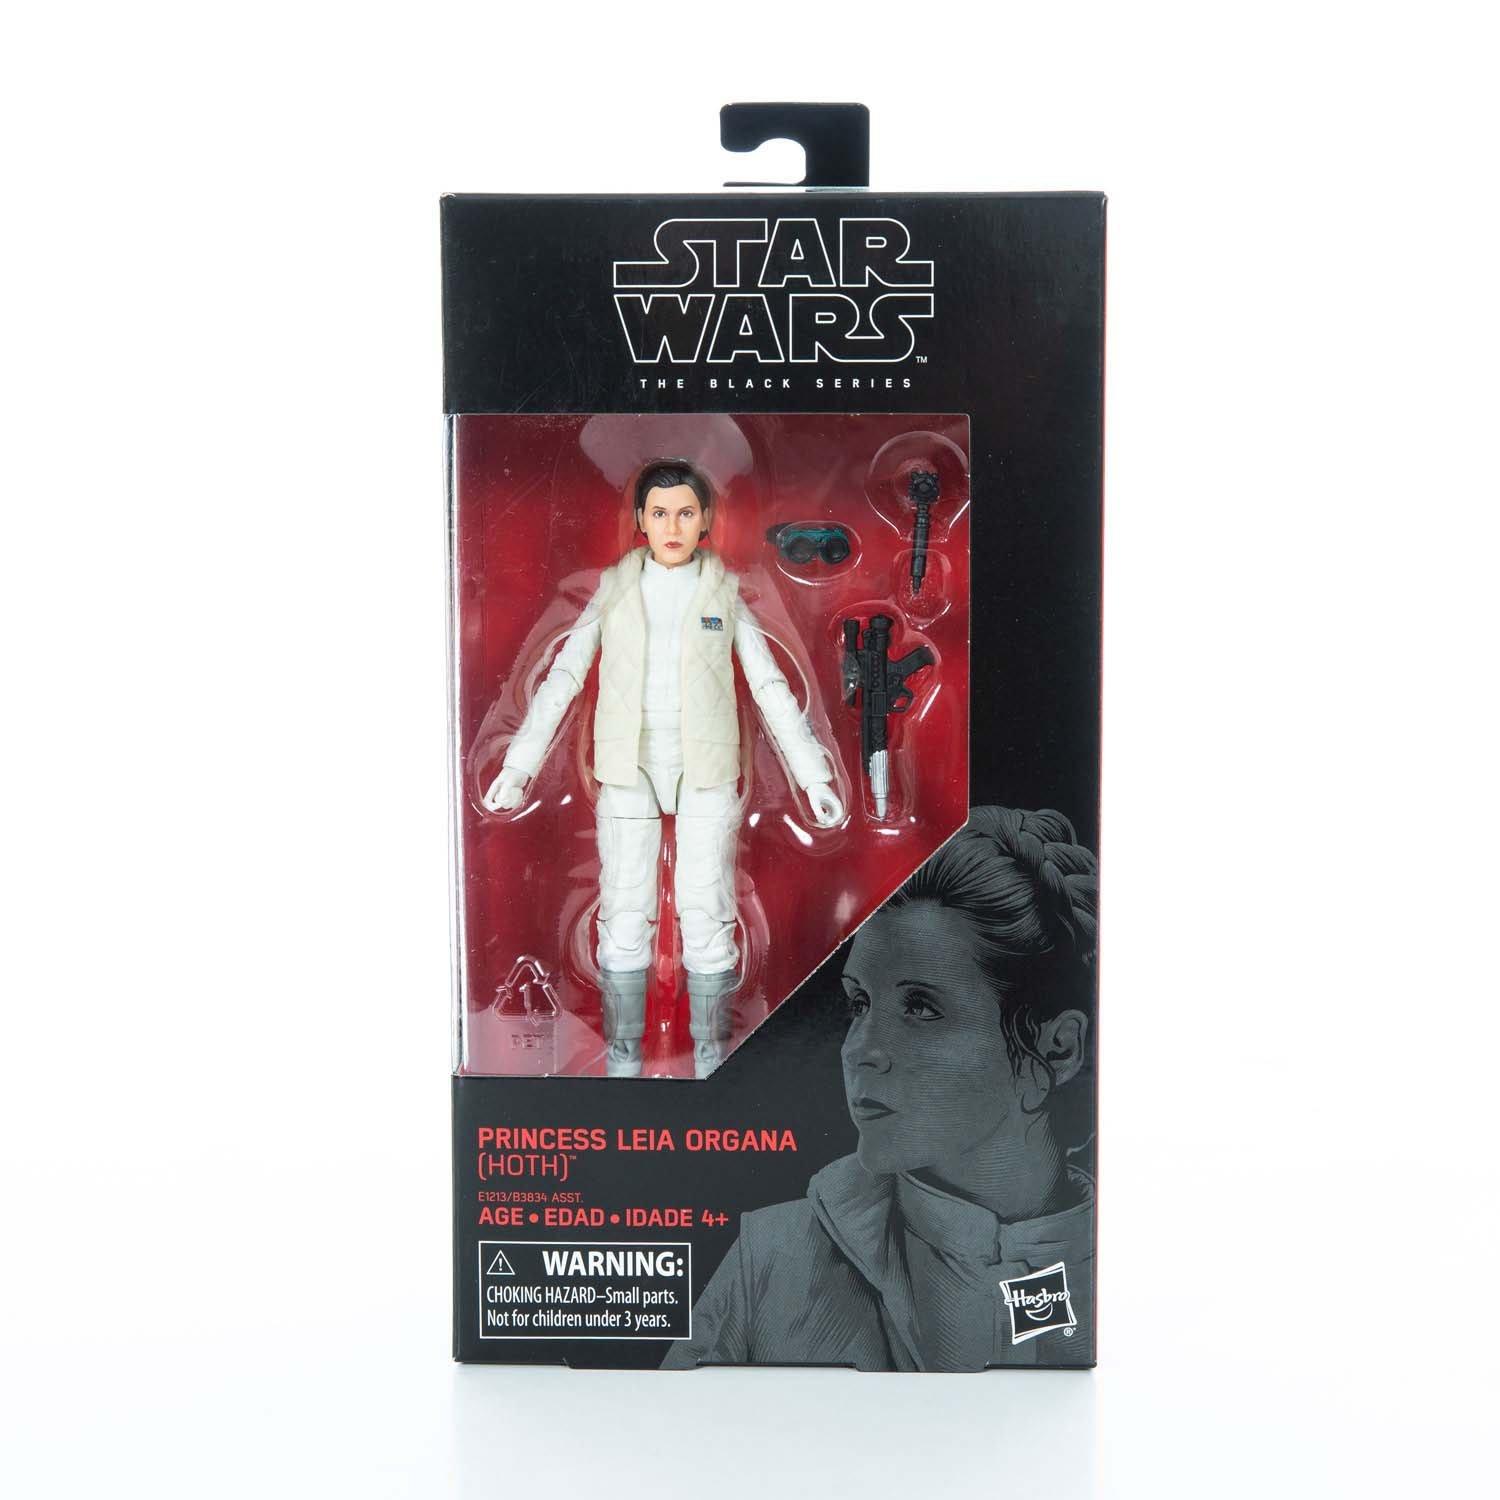 Star Wars Princess Leia Organa Action Figure